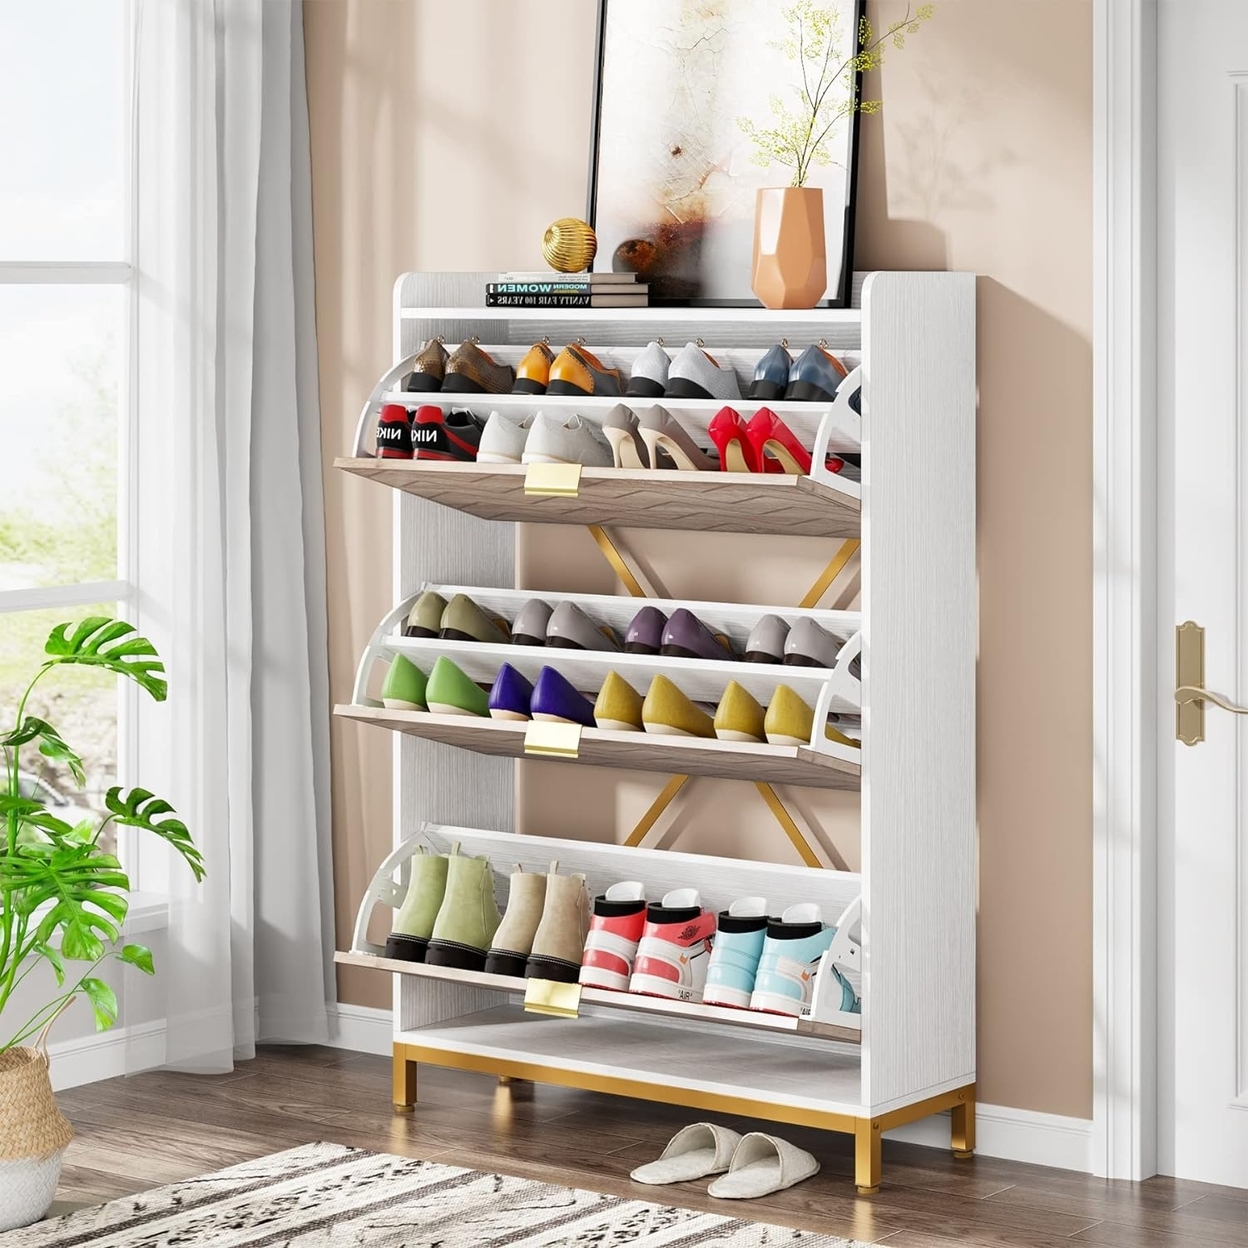 Tribesigns Modern Shoe Storage Cabinet With 3 Flip Doors & Adjustable Shelf, Wooden 18-24 Pair Shoe Rack Organizer With Flip Drawers - Black